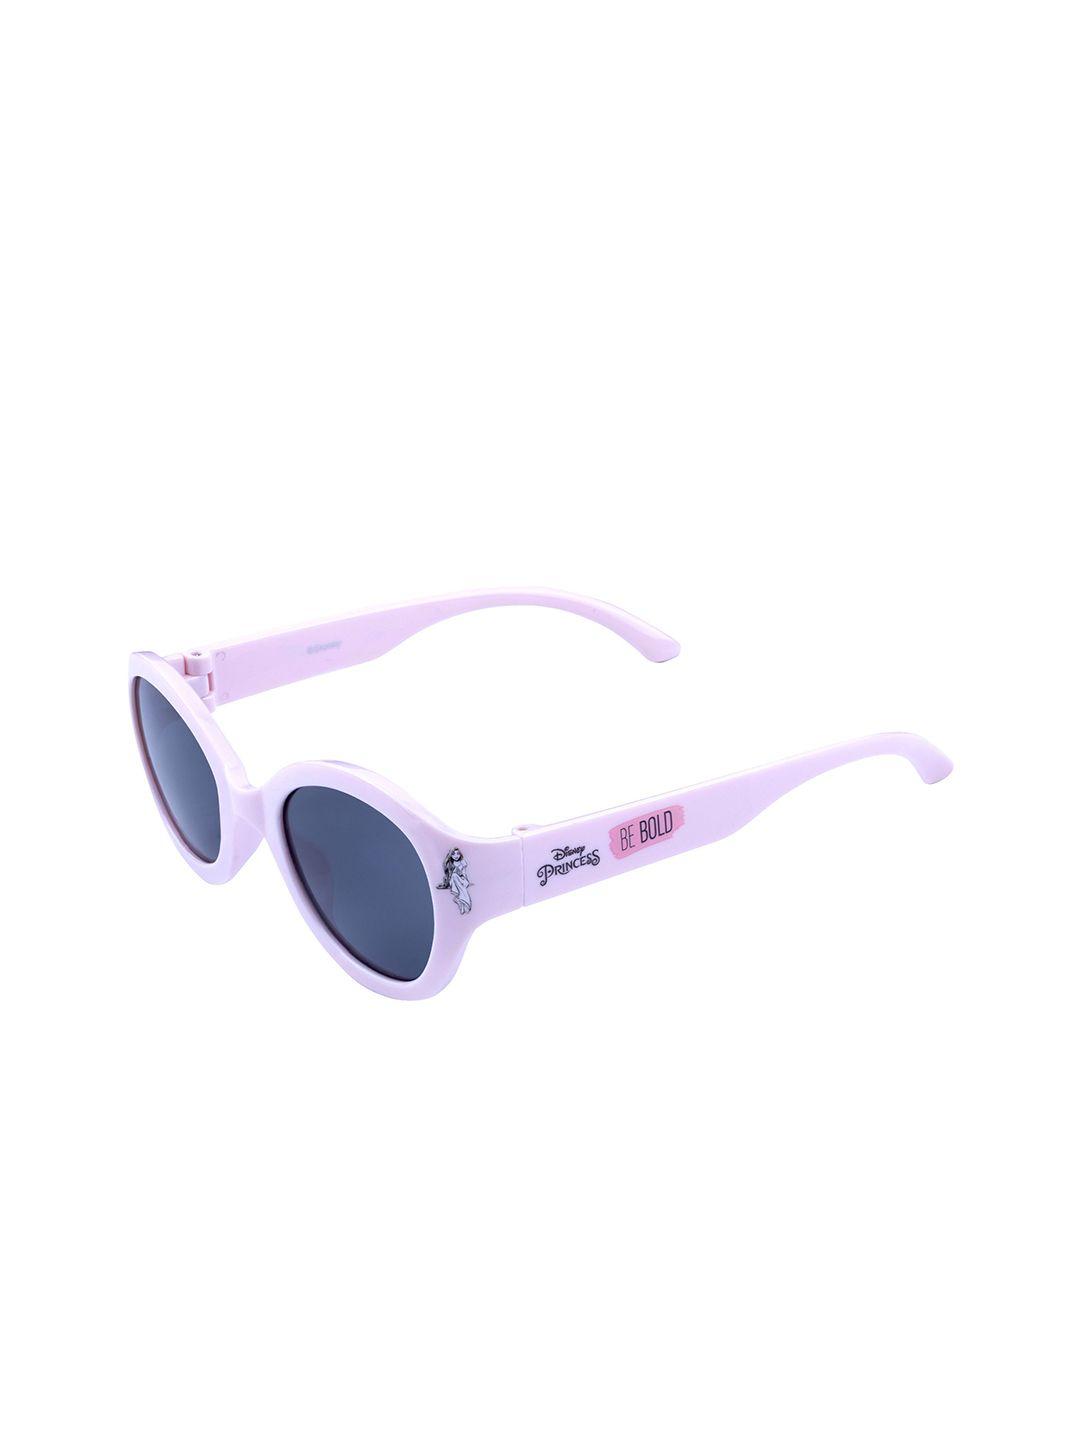 disney-girls-blue-lens-&-pink-princess-printed-oval-sunglasses-trha15211